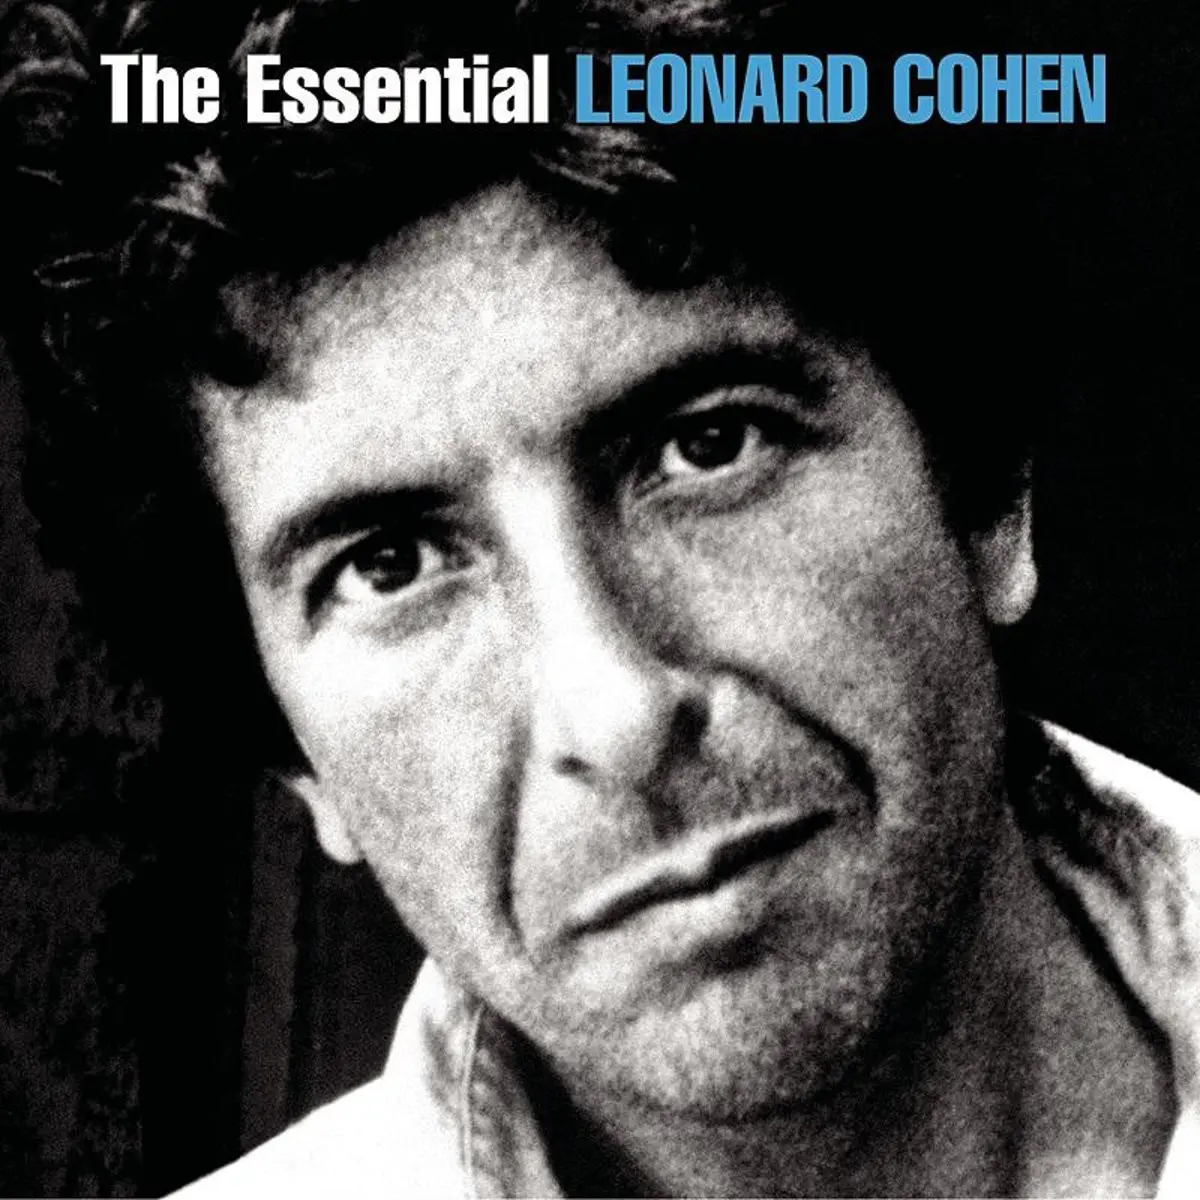 Hey That S No Way To Say Goodbye Lyrics In English The Essential Leonard Cohen Hey That S No Way To Say Goodbye Song Lyrics In English Free Online On Gaana Com